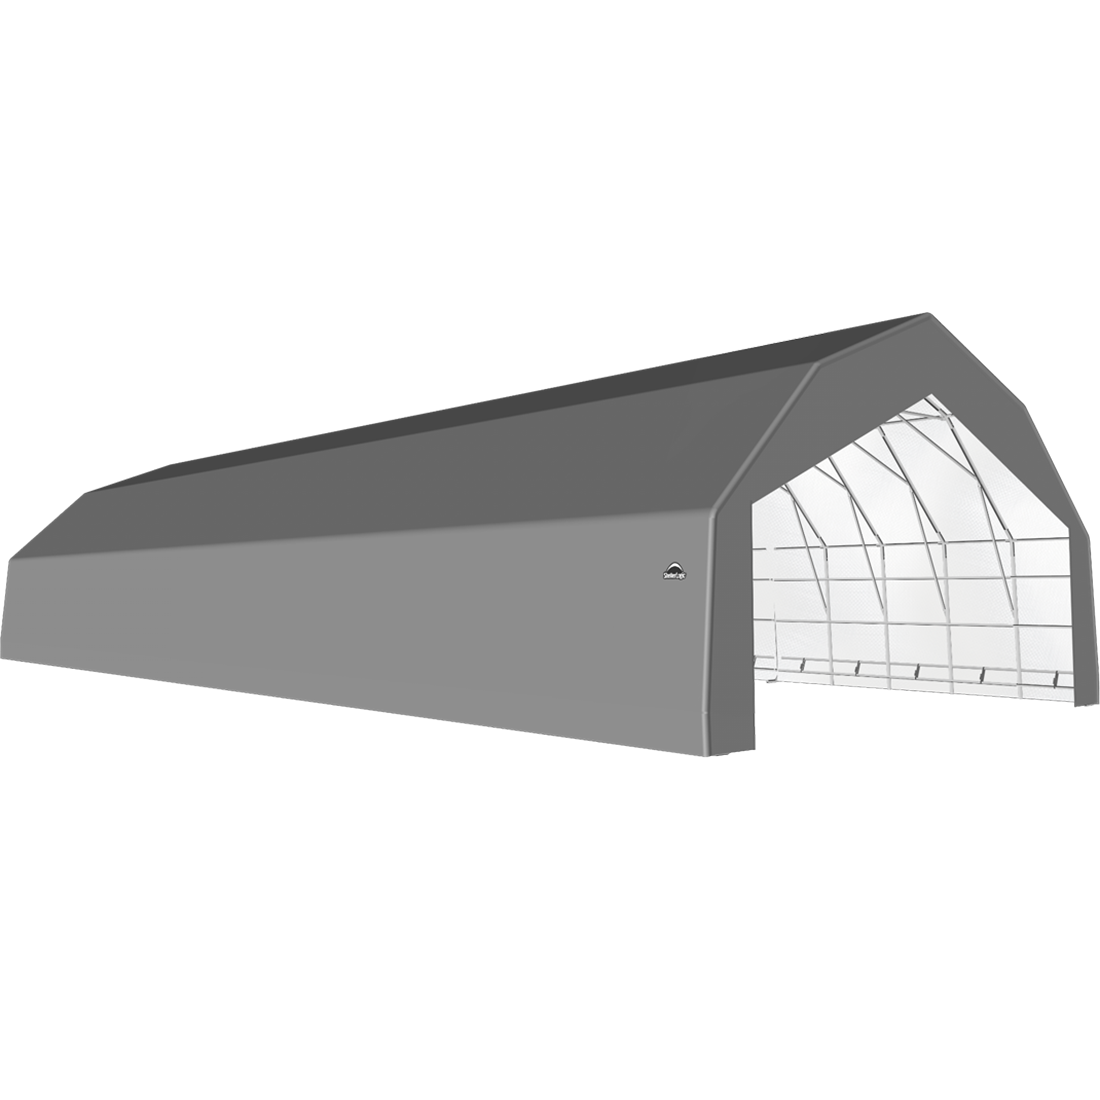 ShelterTech SP Series Barn Shelter, 30 ft. x 80 ft. x 18 ft. Heavy Duty PVC 14.5 oz. Gray